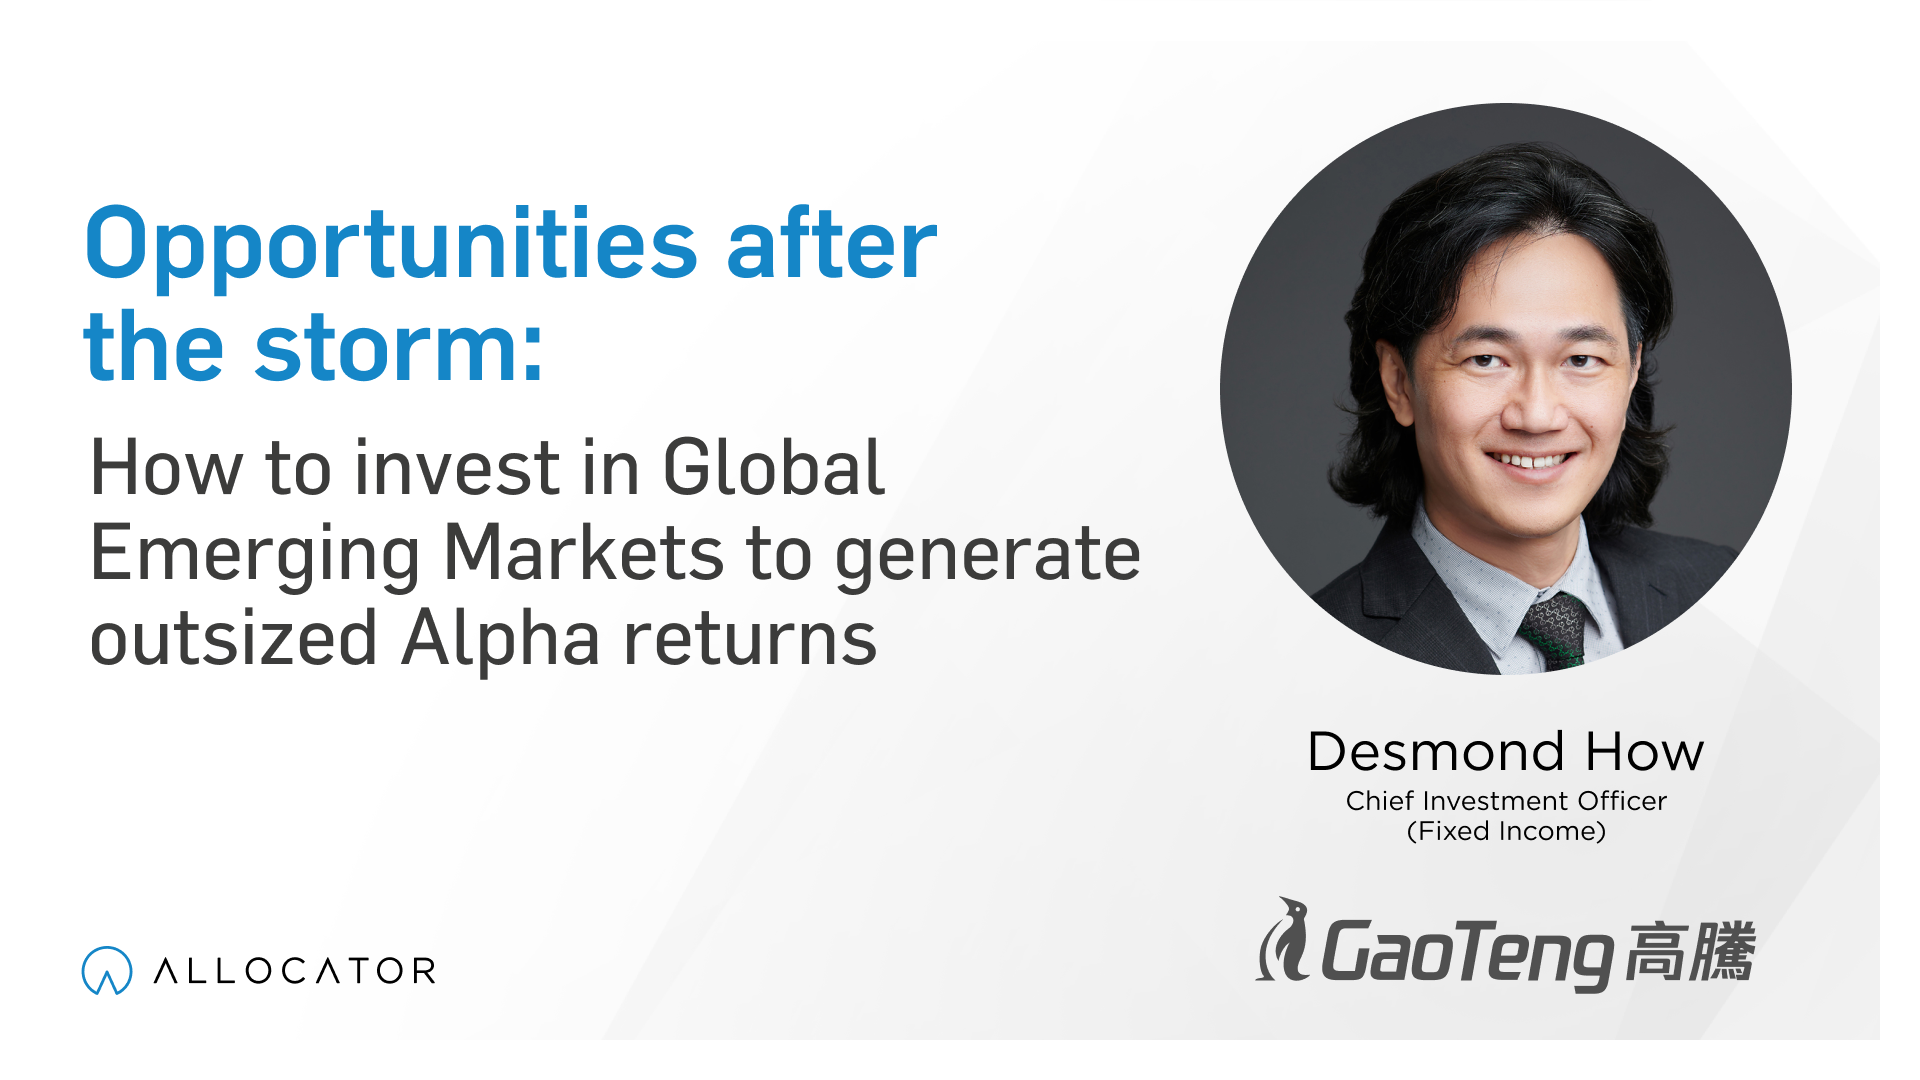 GaoTeng - Outsized Alpha returns in Global Emerging Markets